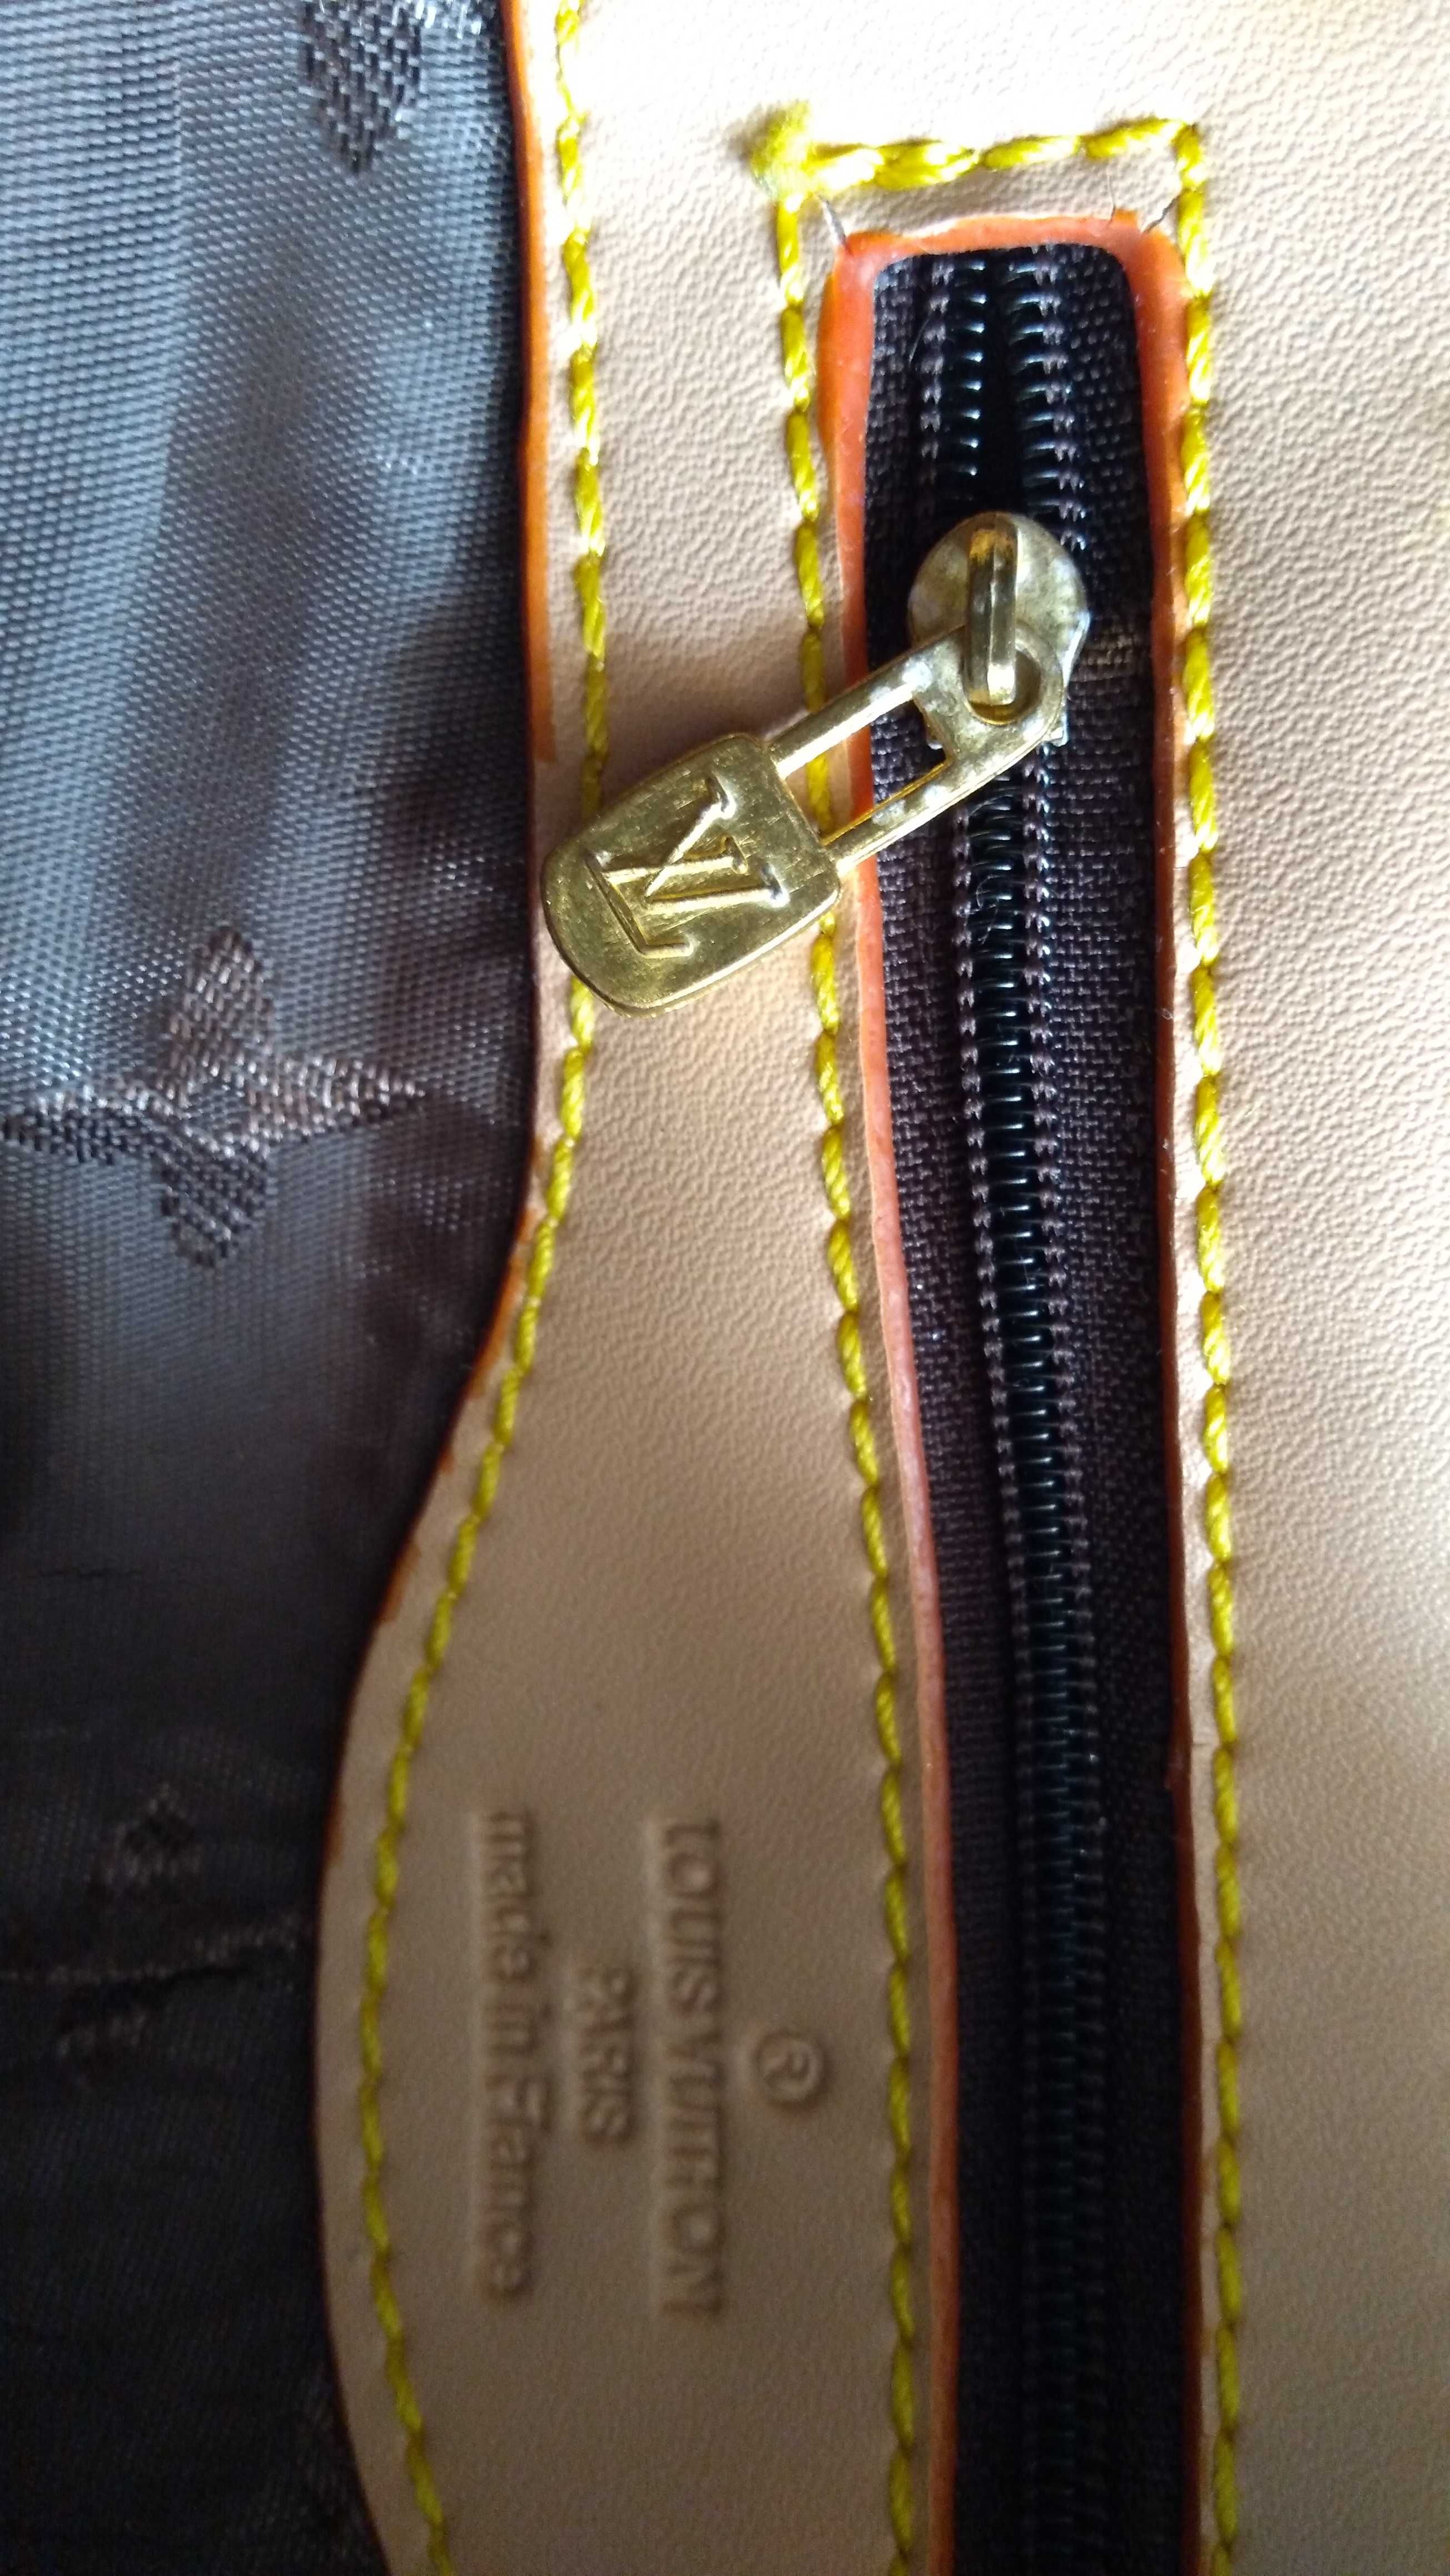 Torebka Louis Vuitton do ręki złoto kolekcjonerska butik vintage moda